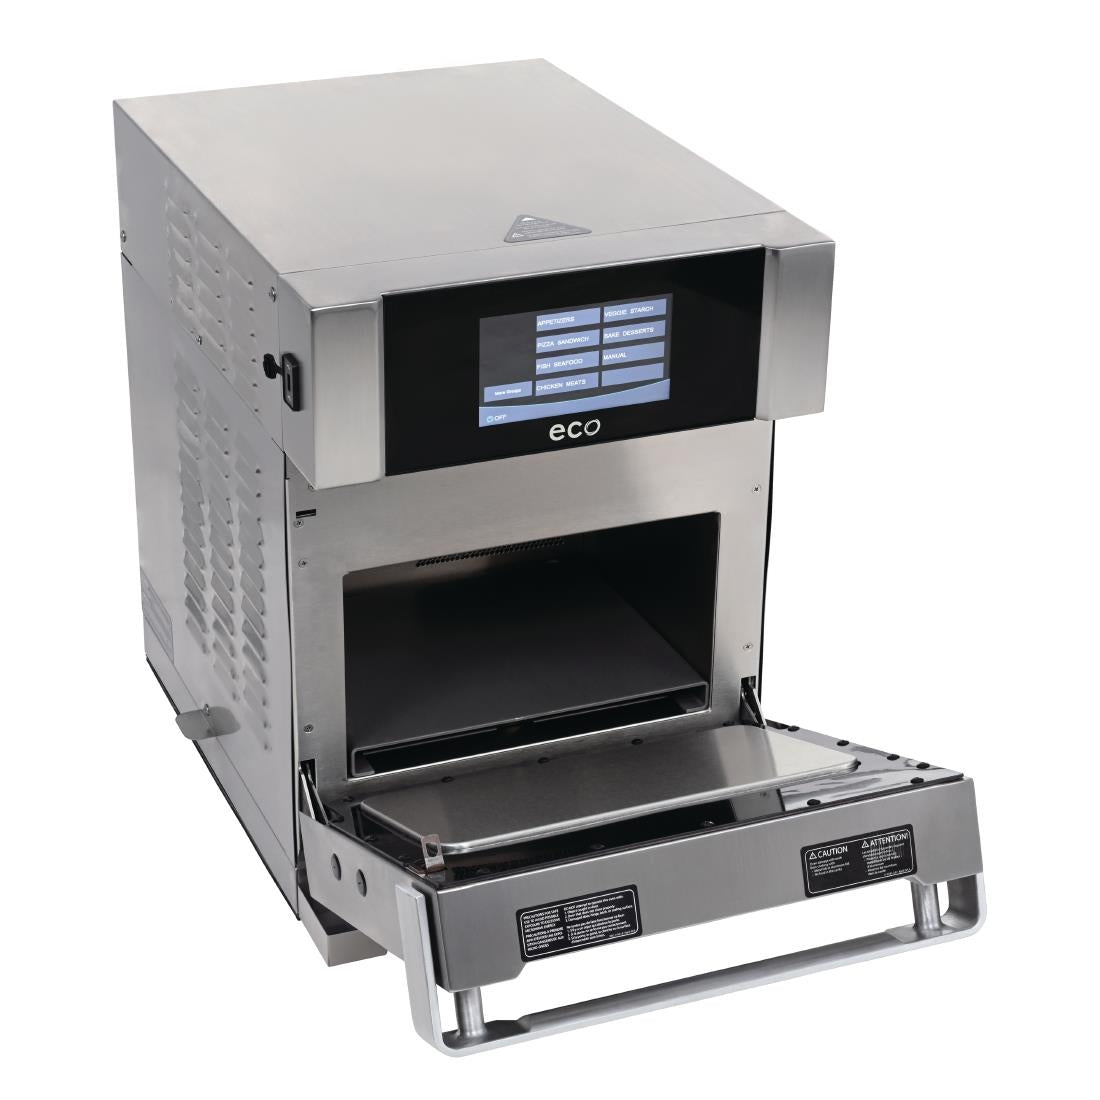 DE309 Turbochef Eco Rapid Cook Oven ECO-9500-13 Silver JD Catering Equipment Solutions Ltd